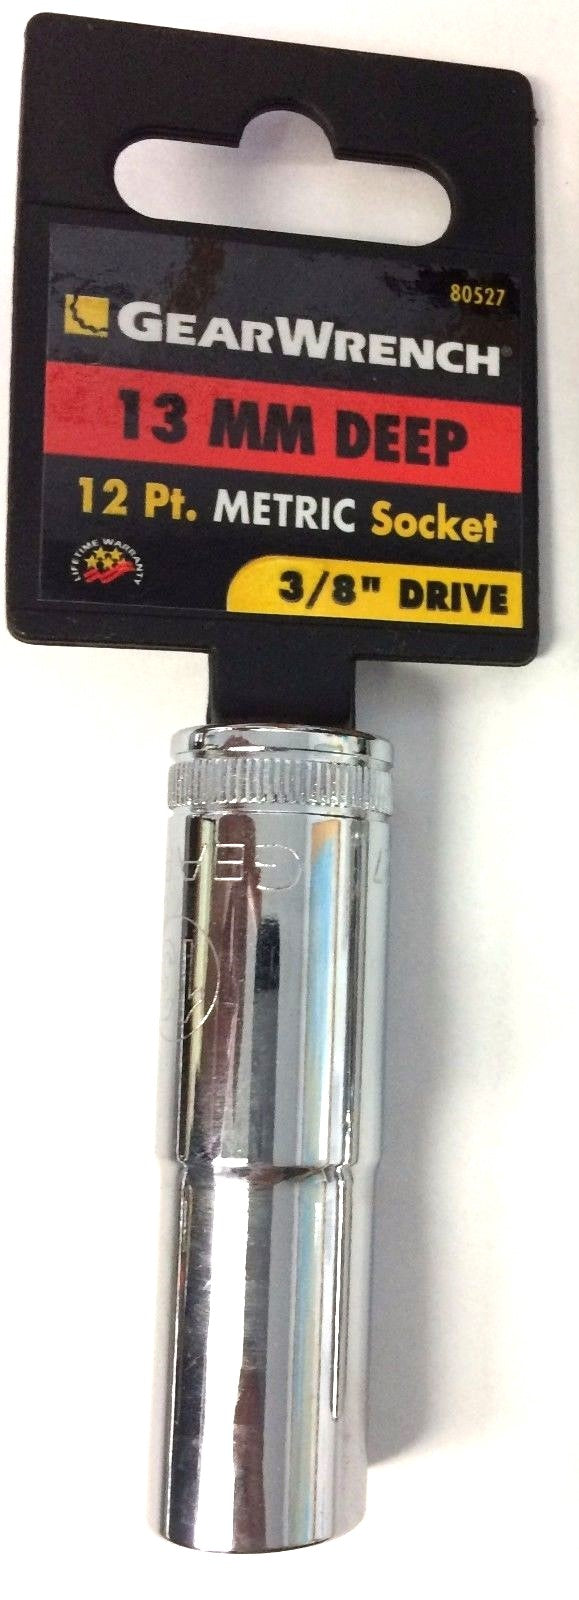 Gearwrench 80527 13mm Deep Socket 12pt. 3/8" Drive